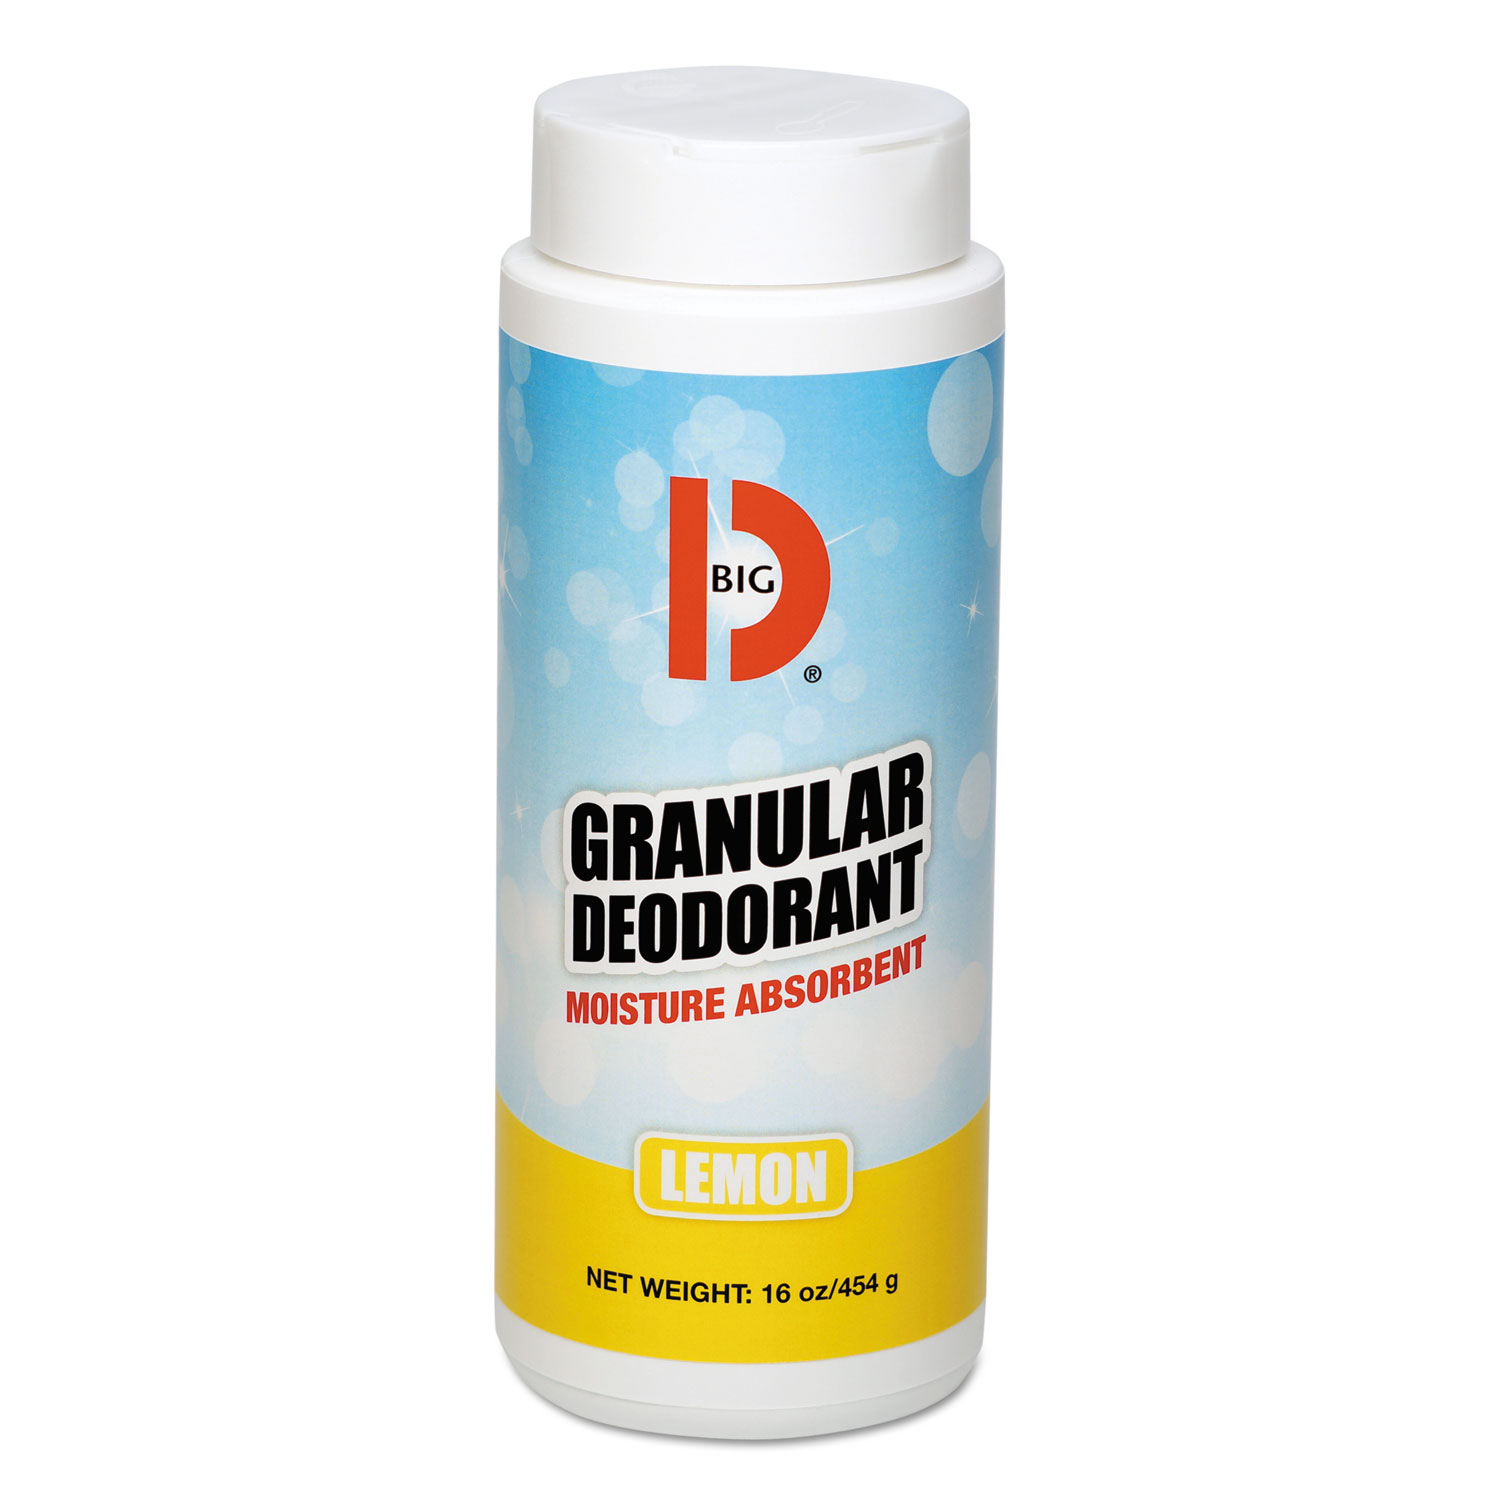 Granular Deodorant, Lemon, 16 oz, Shaker Can, 12/Carton